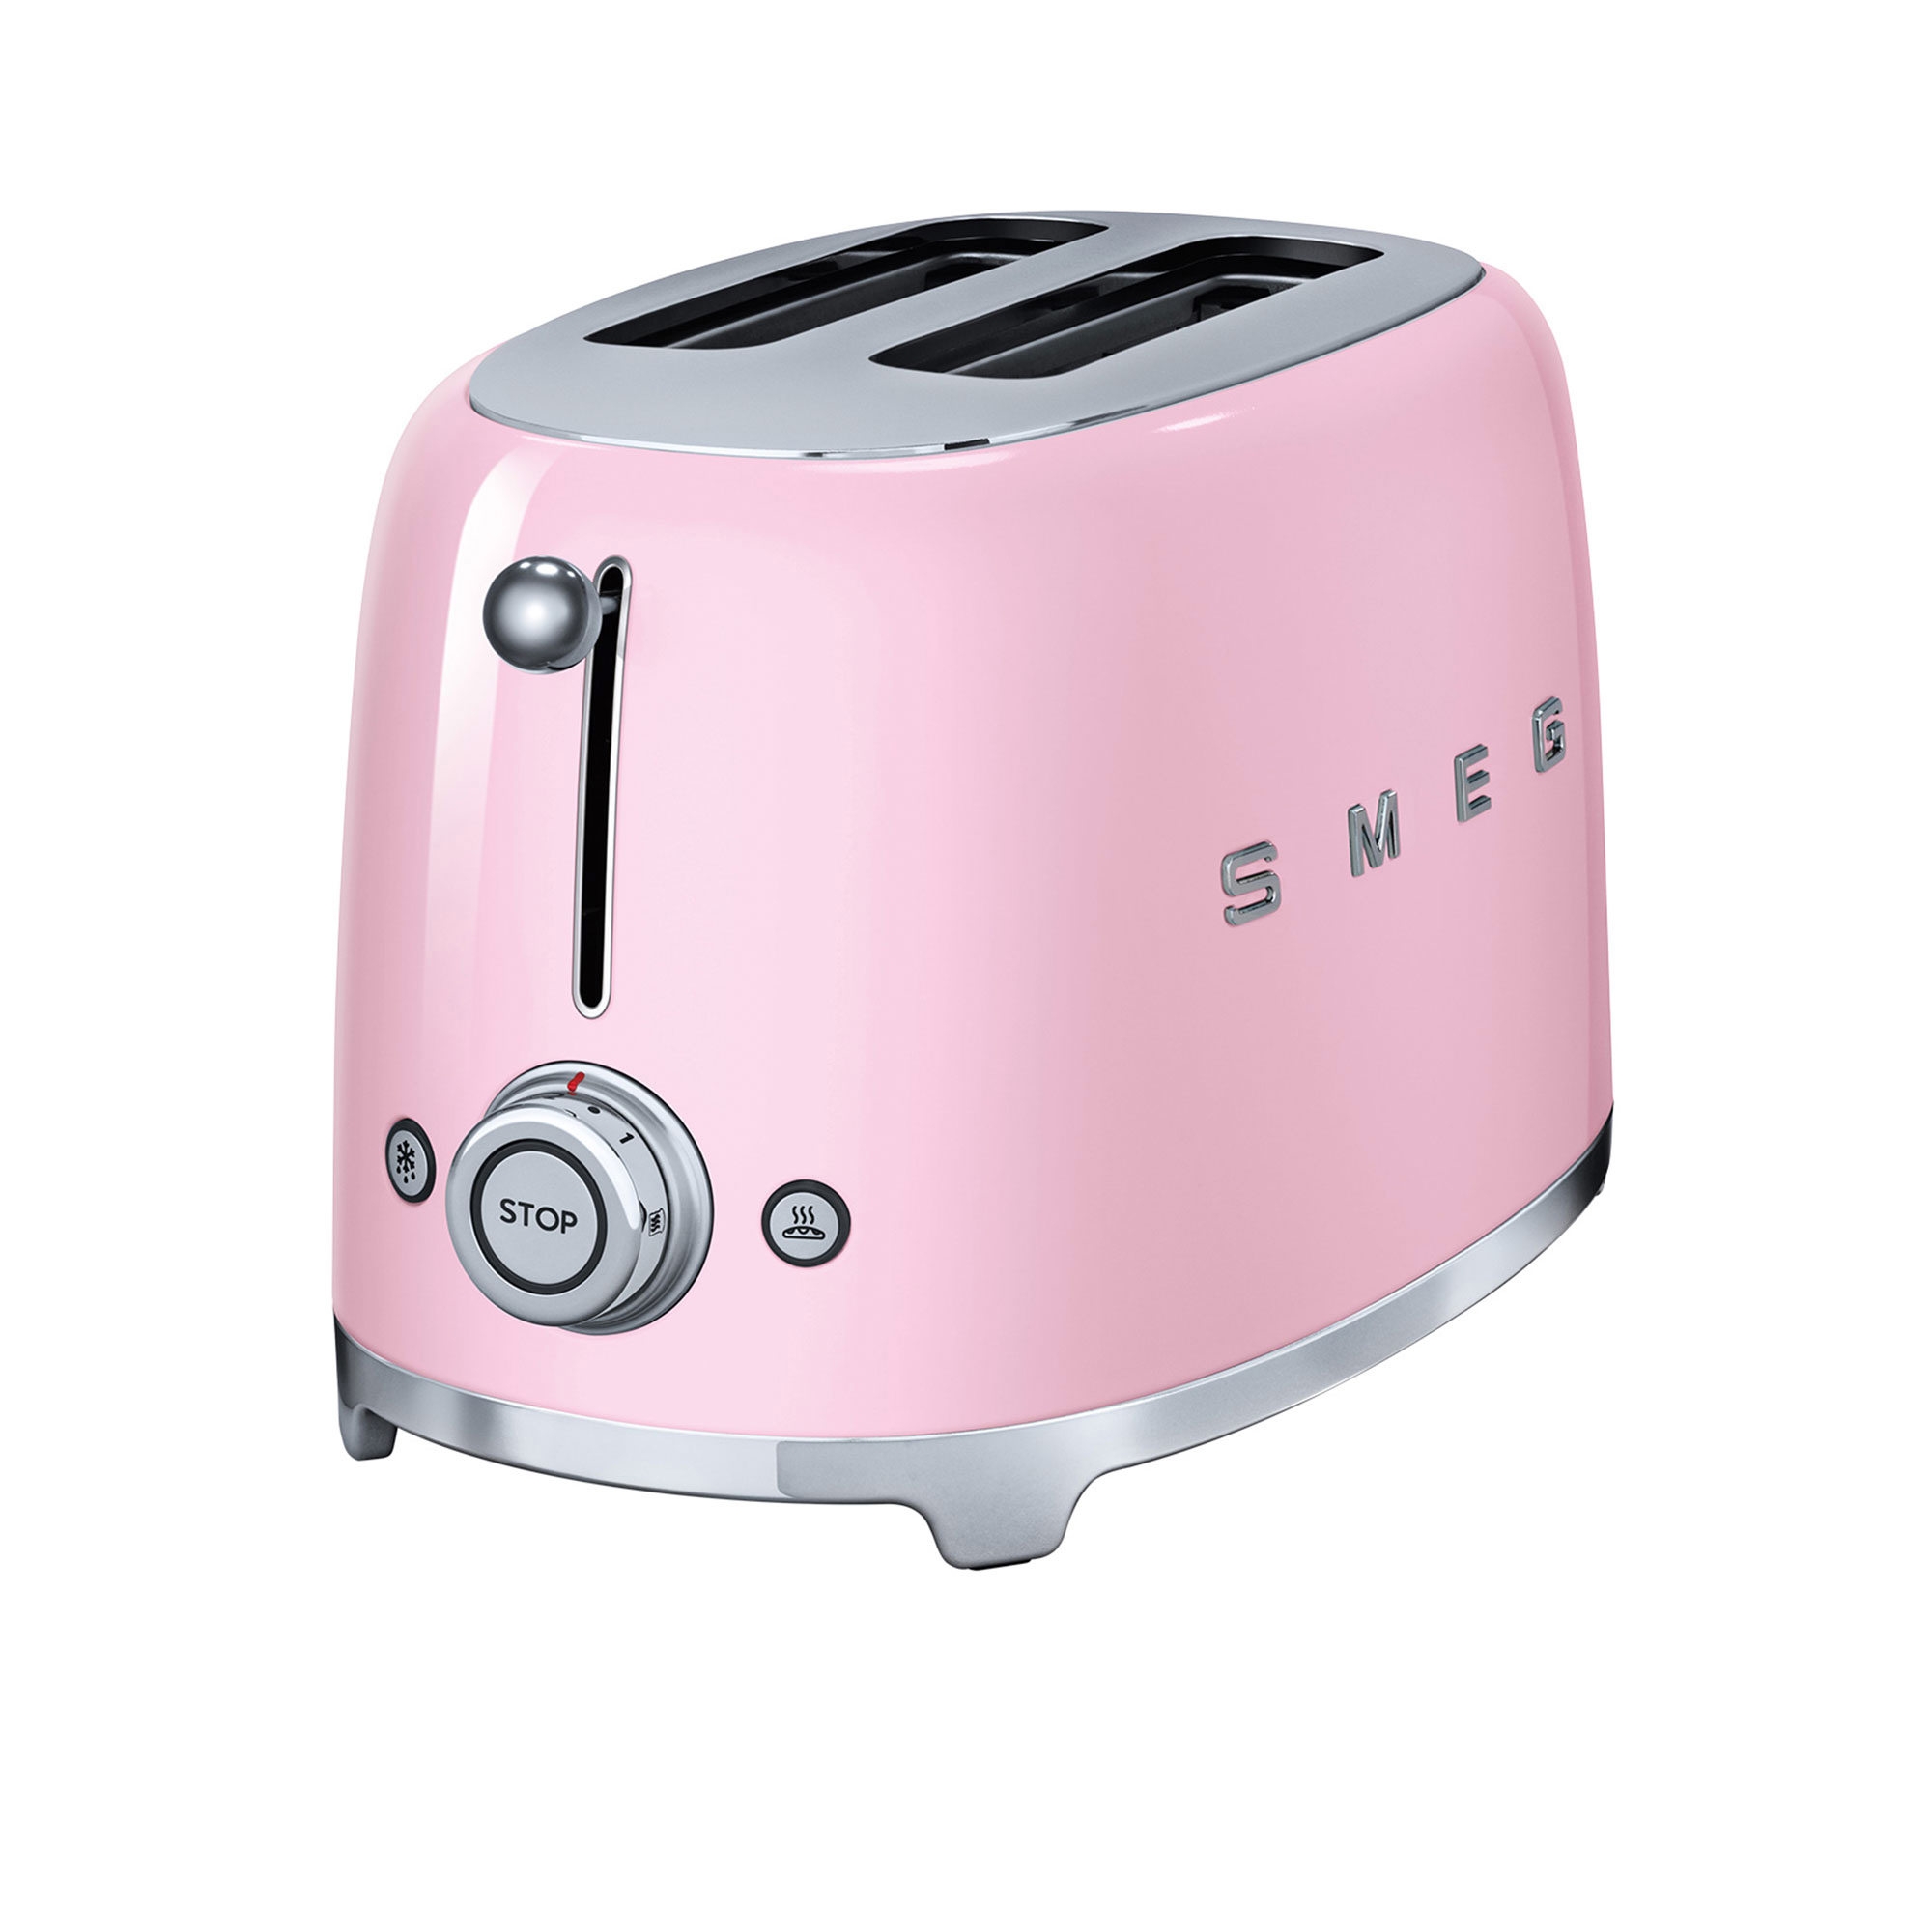 Smeg 50's Retro Style 2 Slice Toaster Pastel Pink Image 1